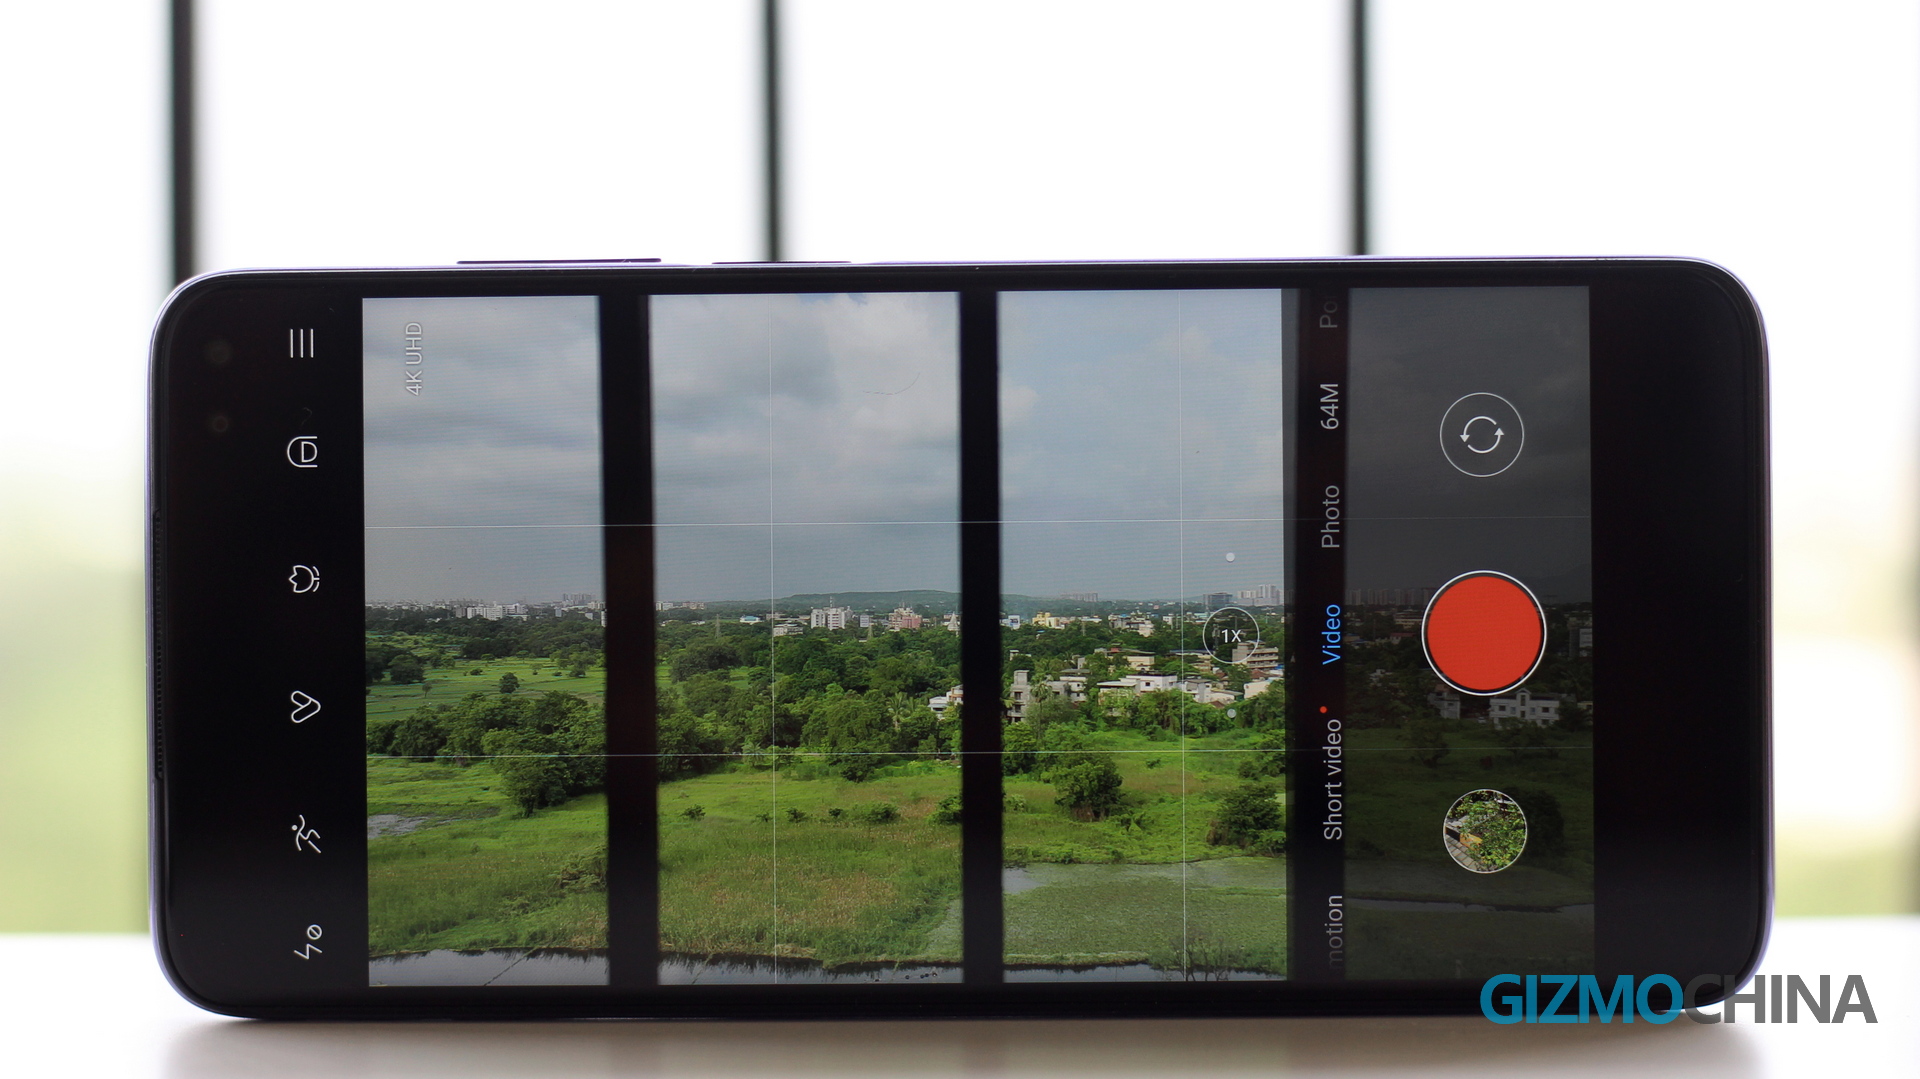 The Poco X2 smartphone packs a 120Hz display, six cameras for $225